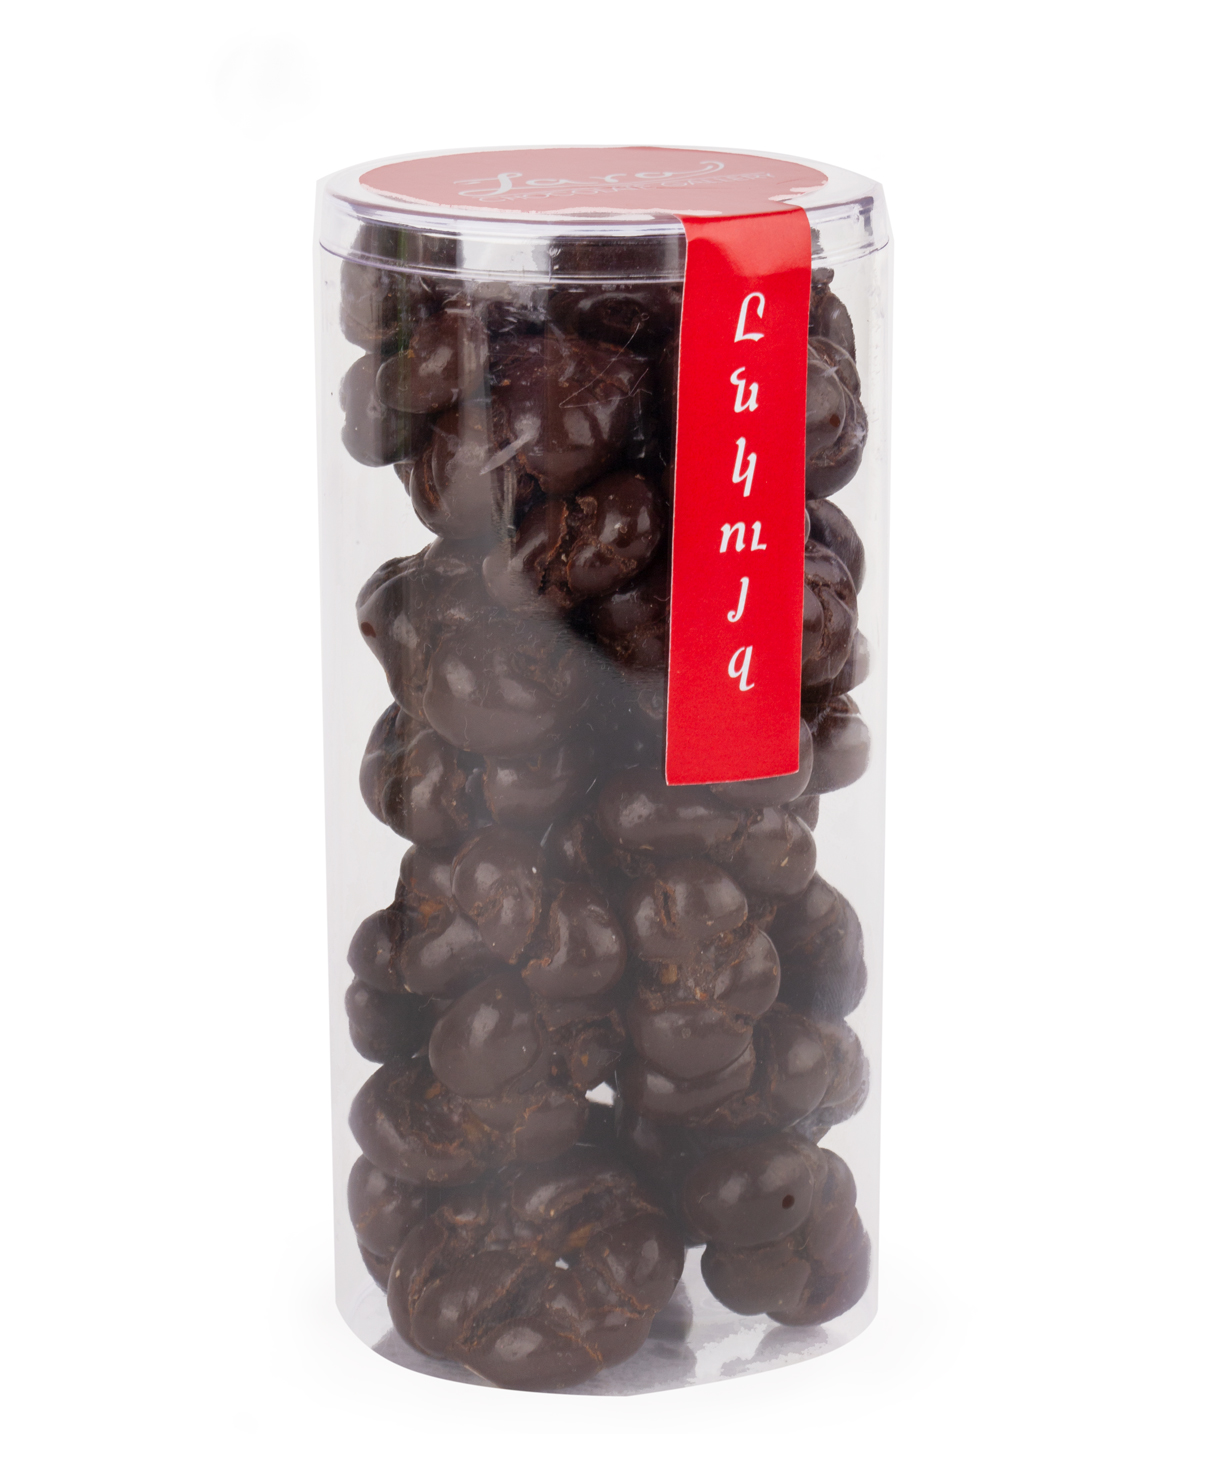 Chocolate `Lara Chocolate` hazelnuts, walnuts, almonds